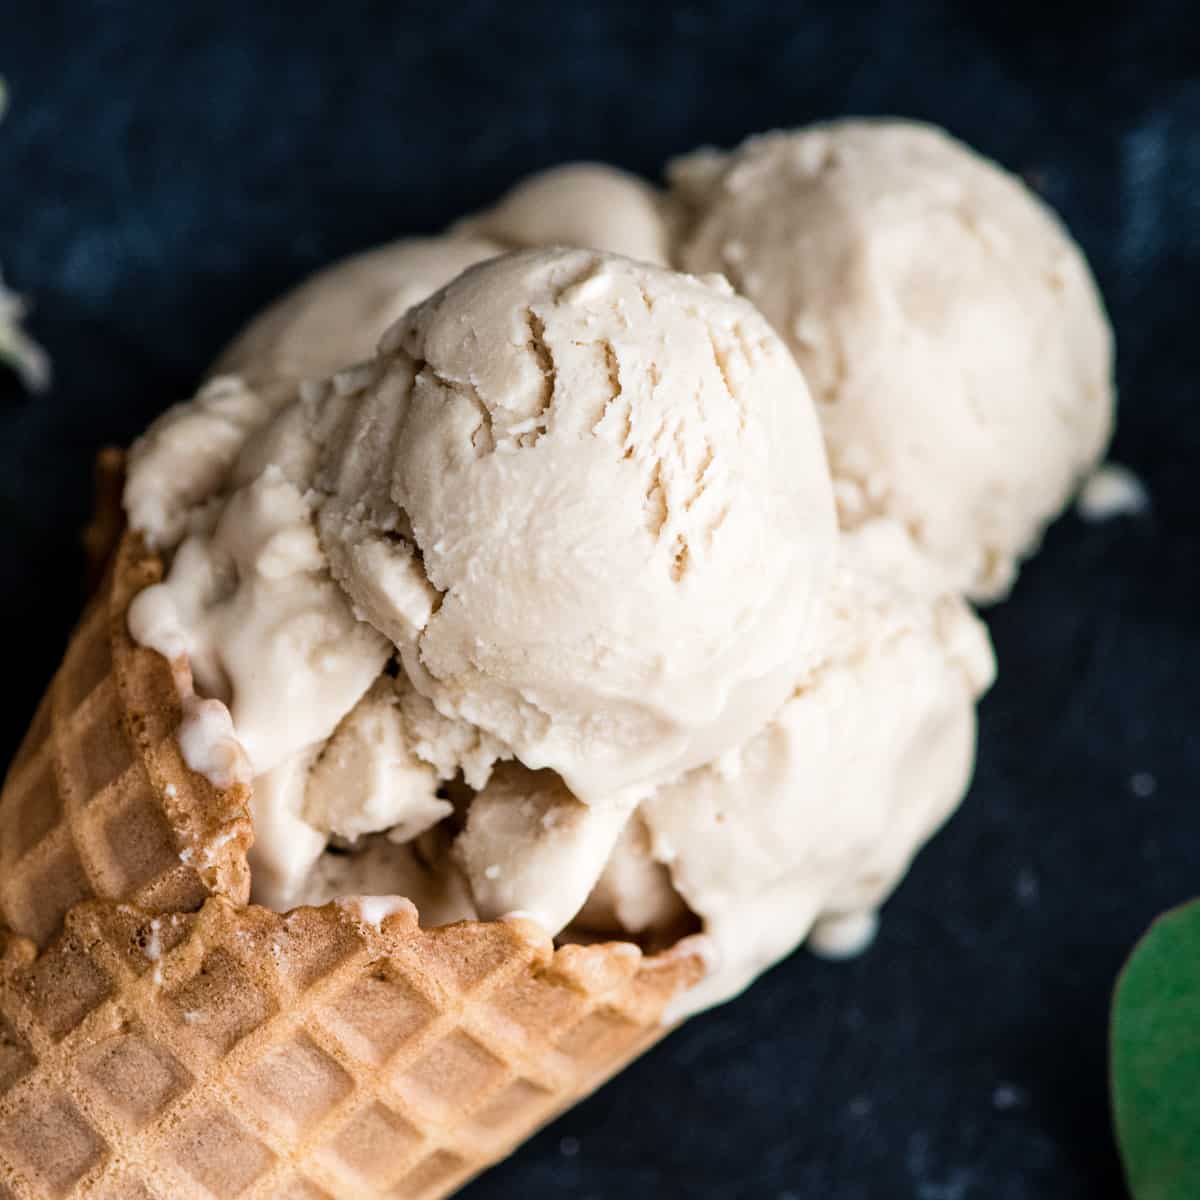 Basic Vanilla Ice Cream - Recipes